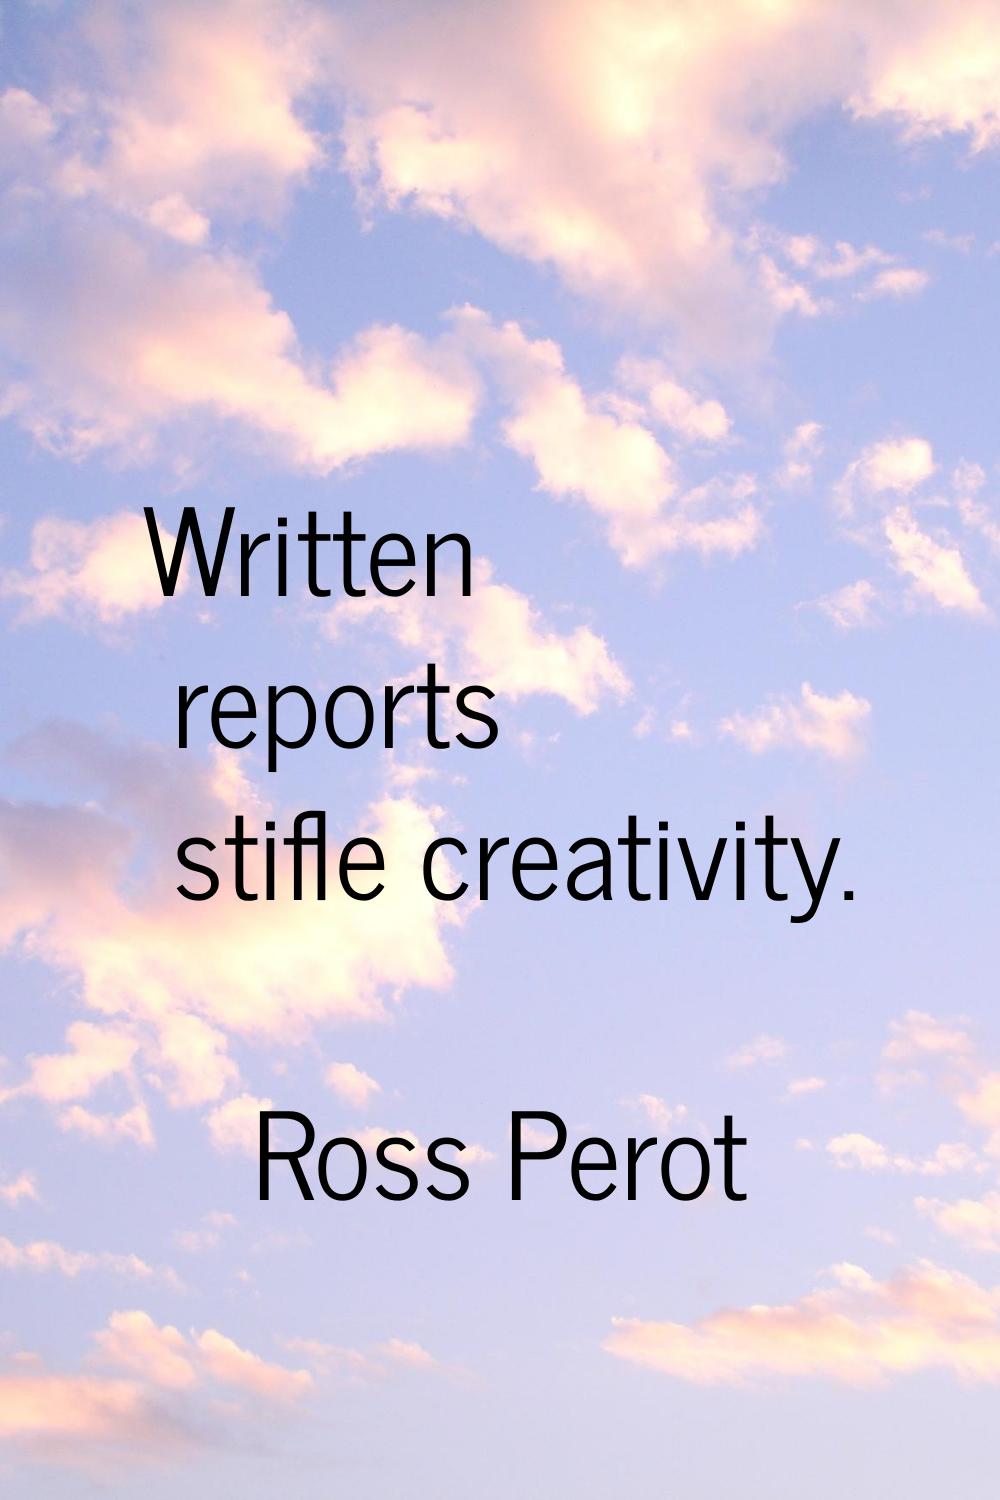 Written reports stifle creativity.